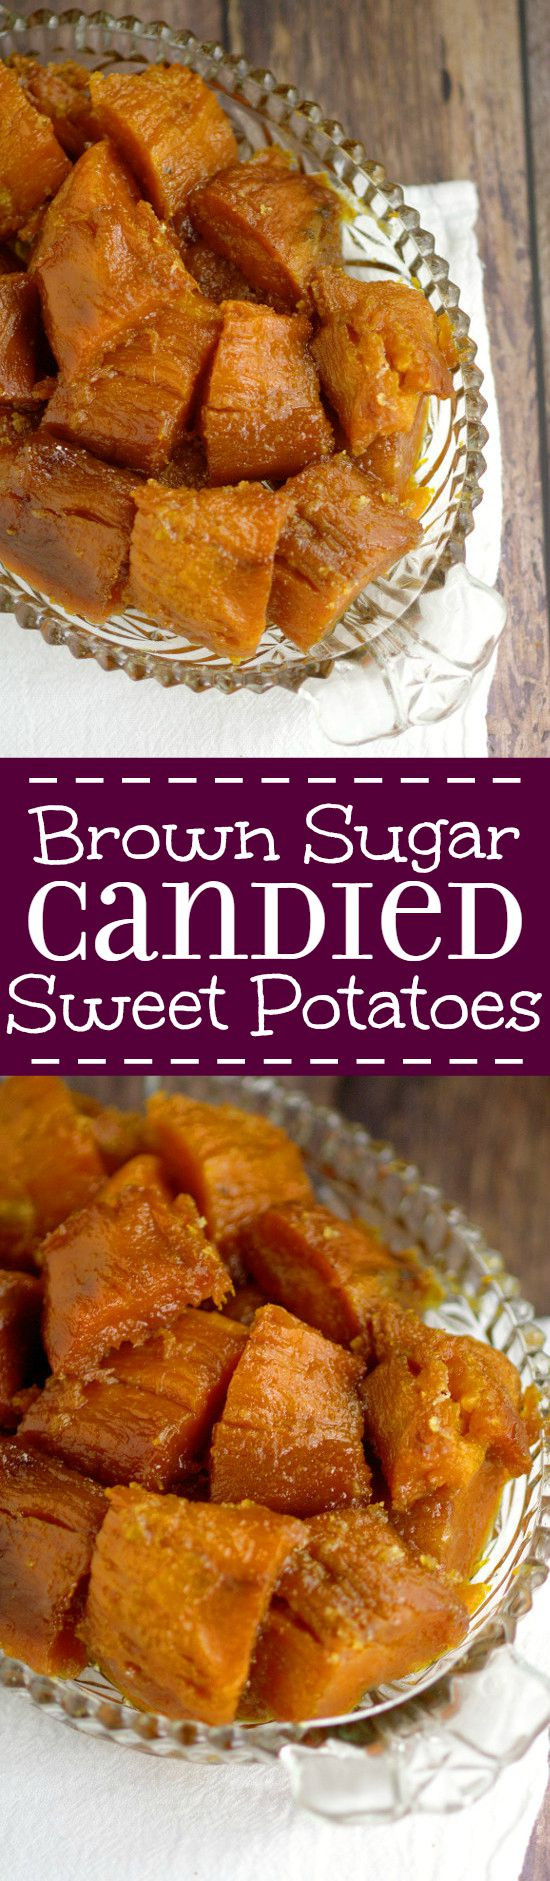 Candied Sweet Potato Recipe
 Can d Sweet Potatoes